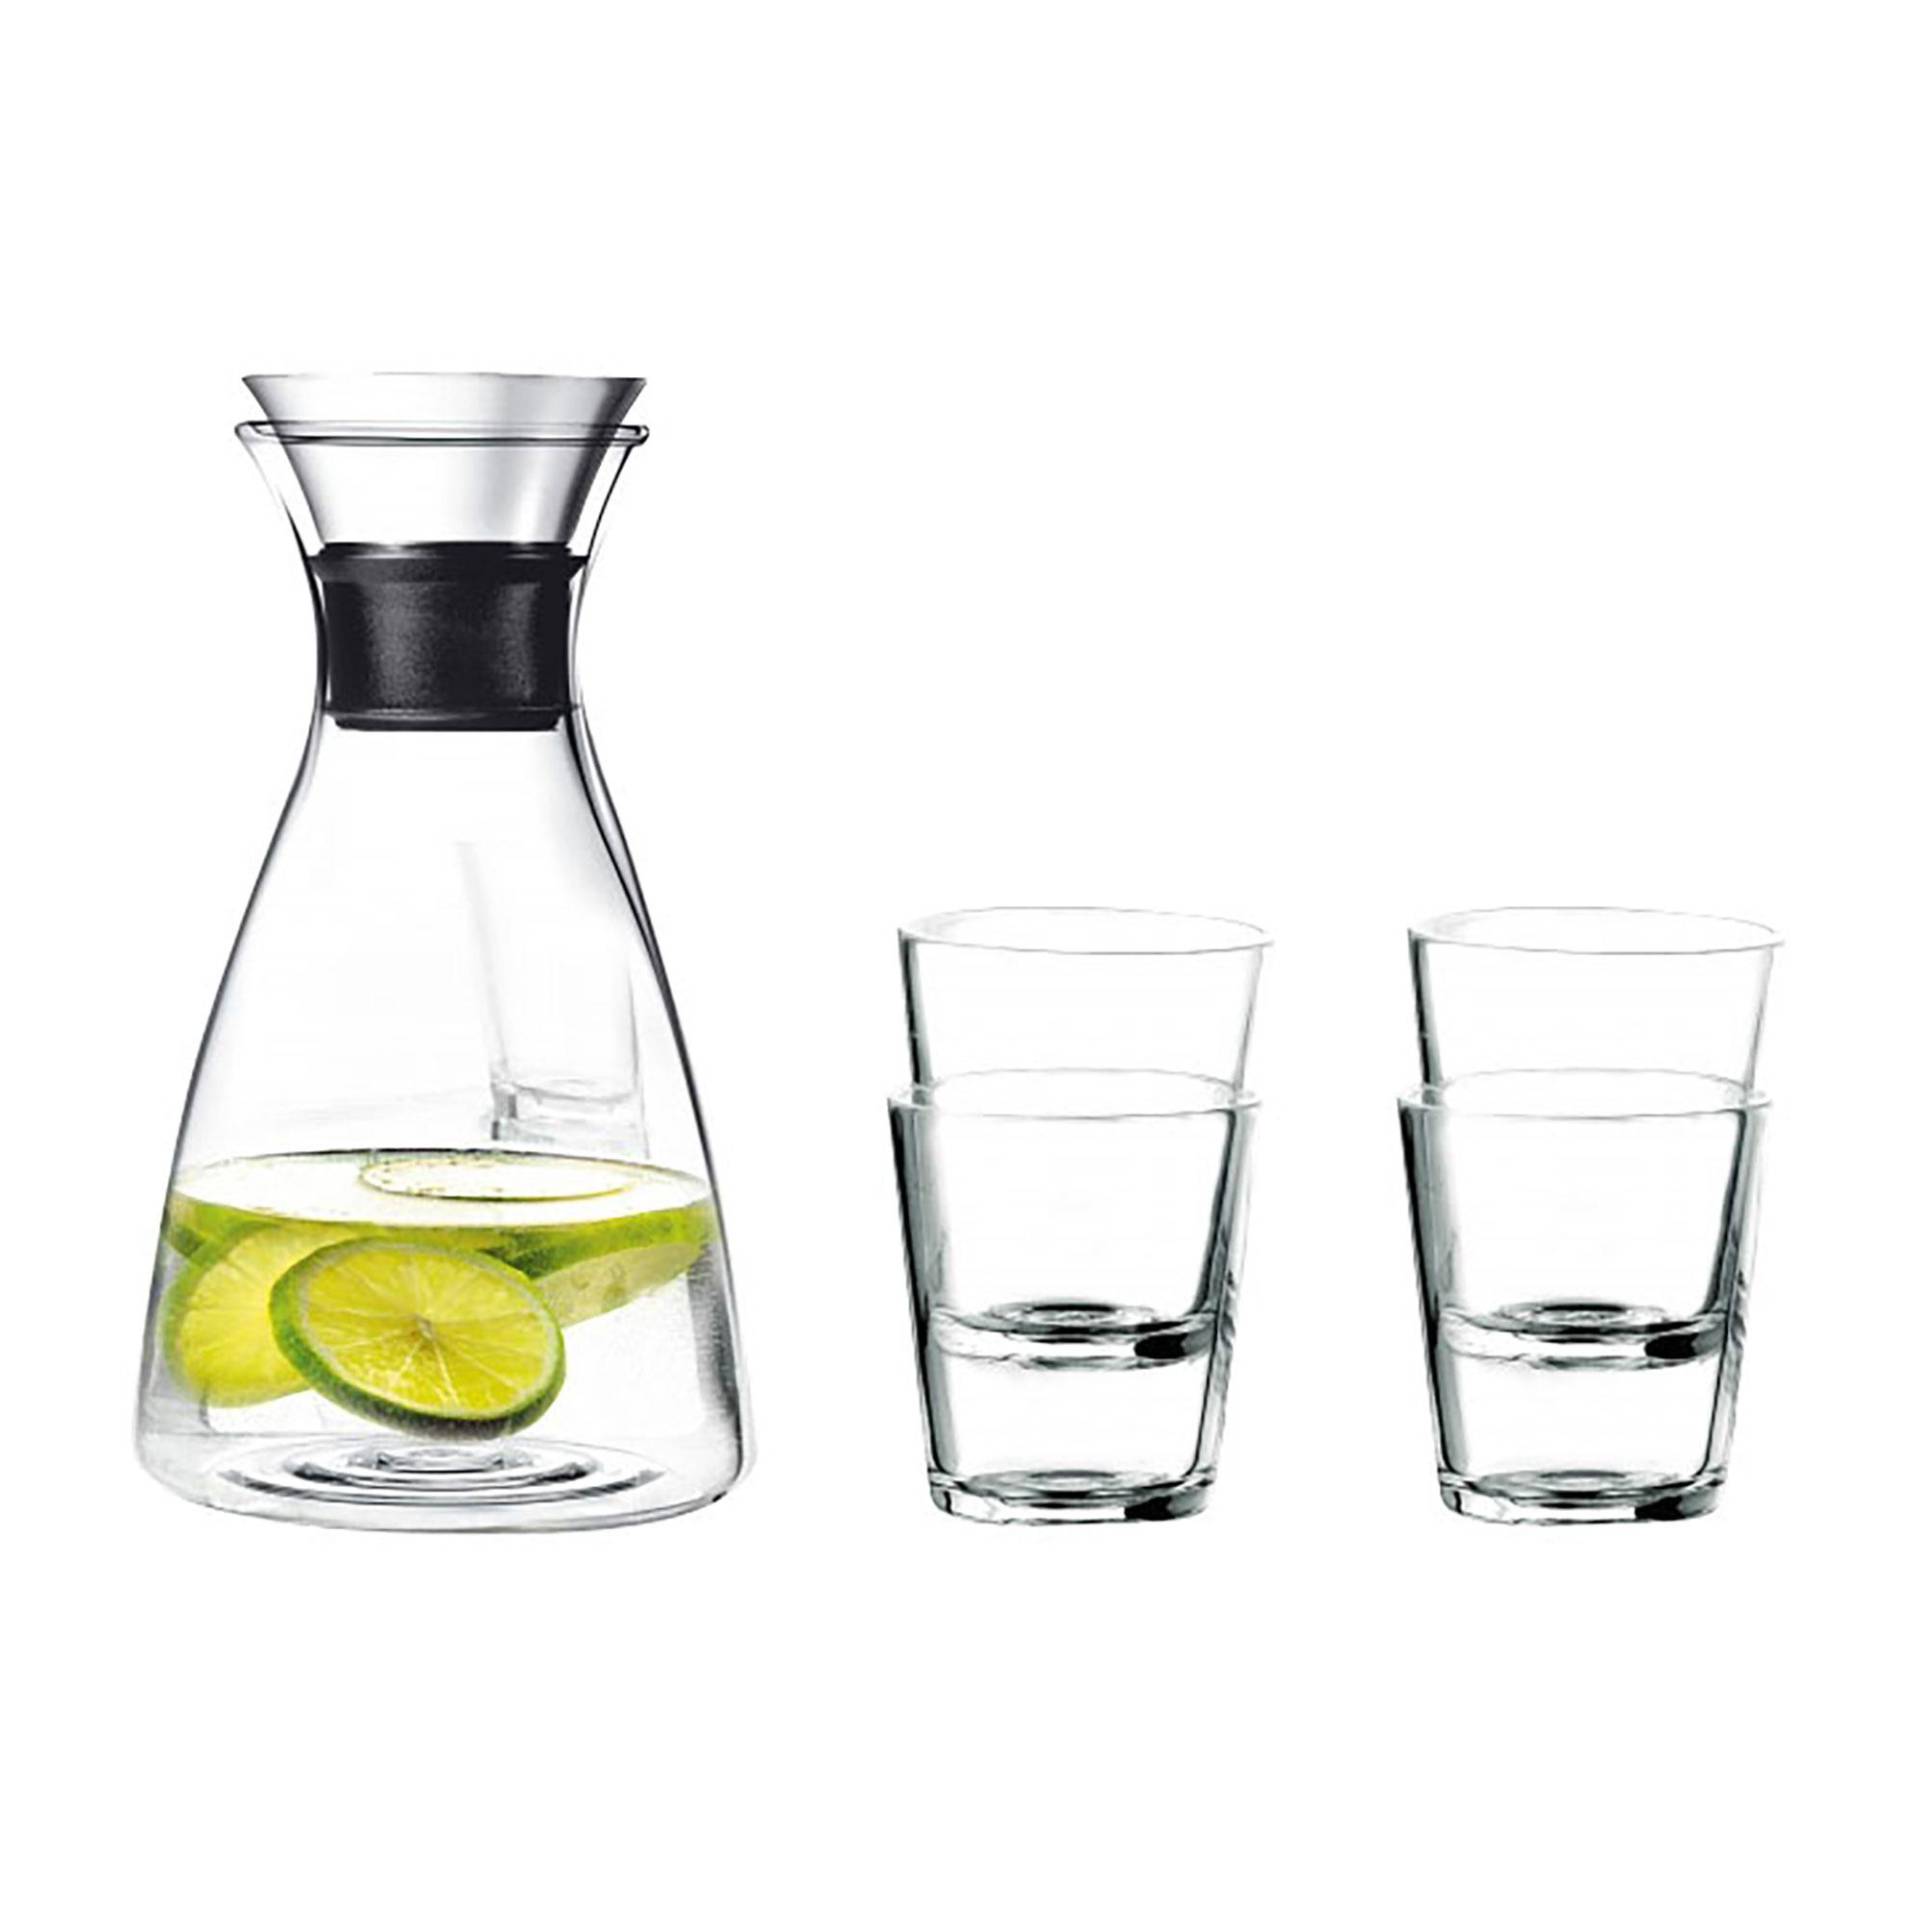 Eva Solo - Karaffe mit 4 Gläsern 25cl - transparent/Karaffe 1L / Glas 0,25L/100 % tropffrei von Eva Solo